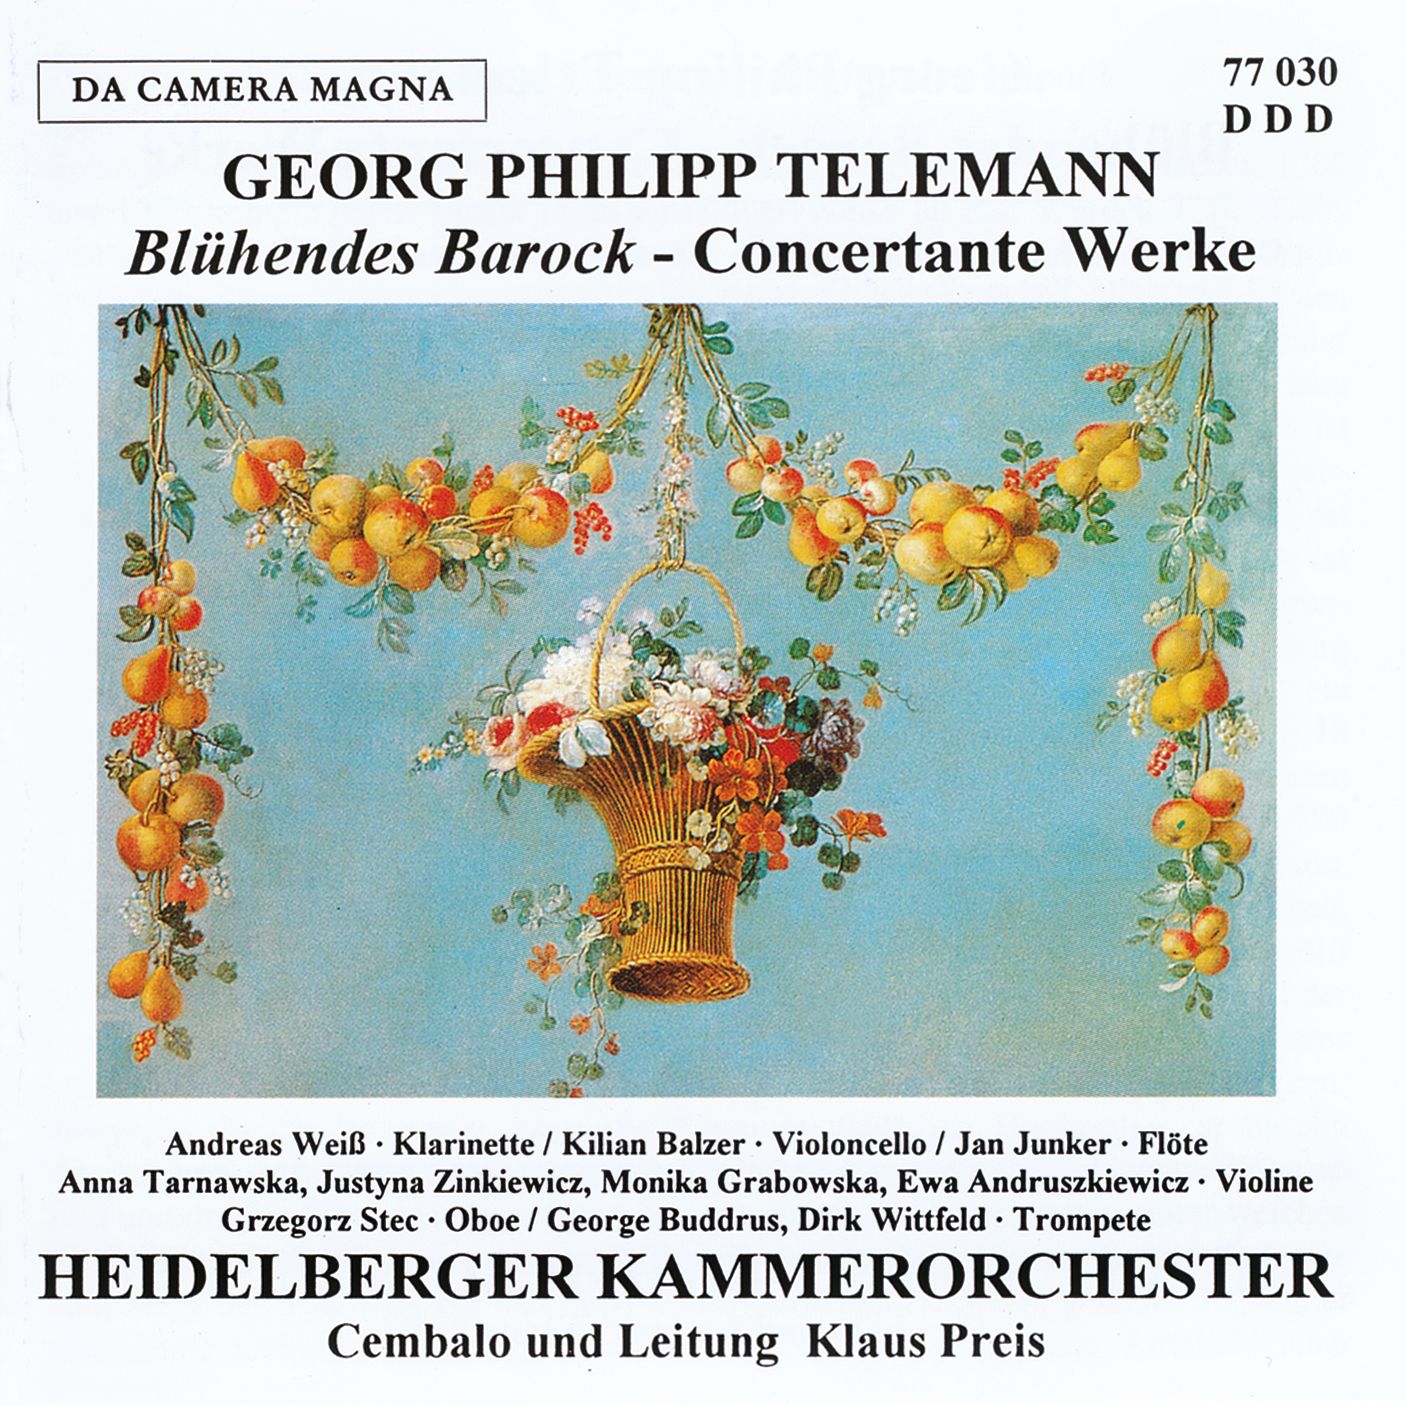 Georg Philipp Telemann - Blühendes Barock